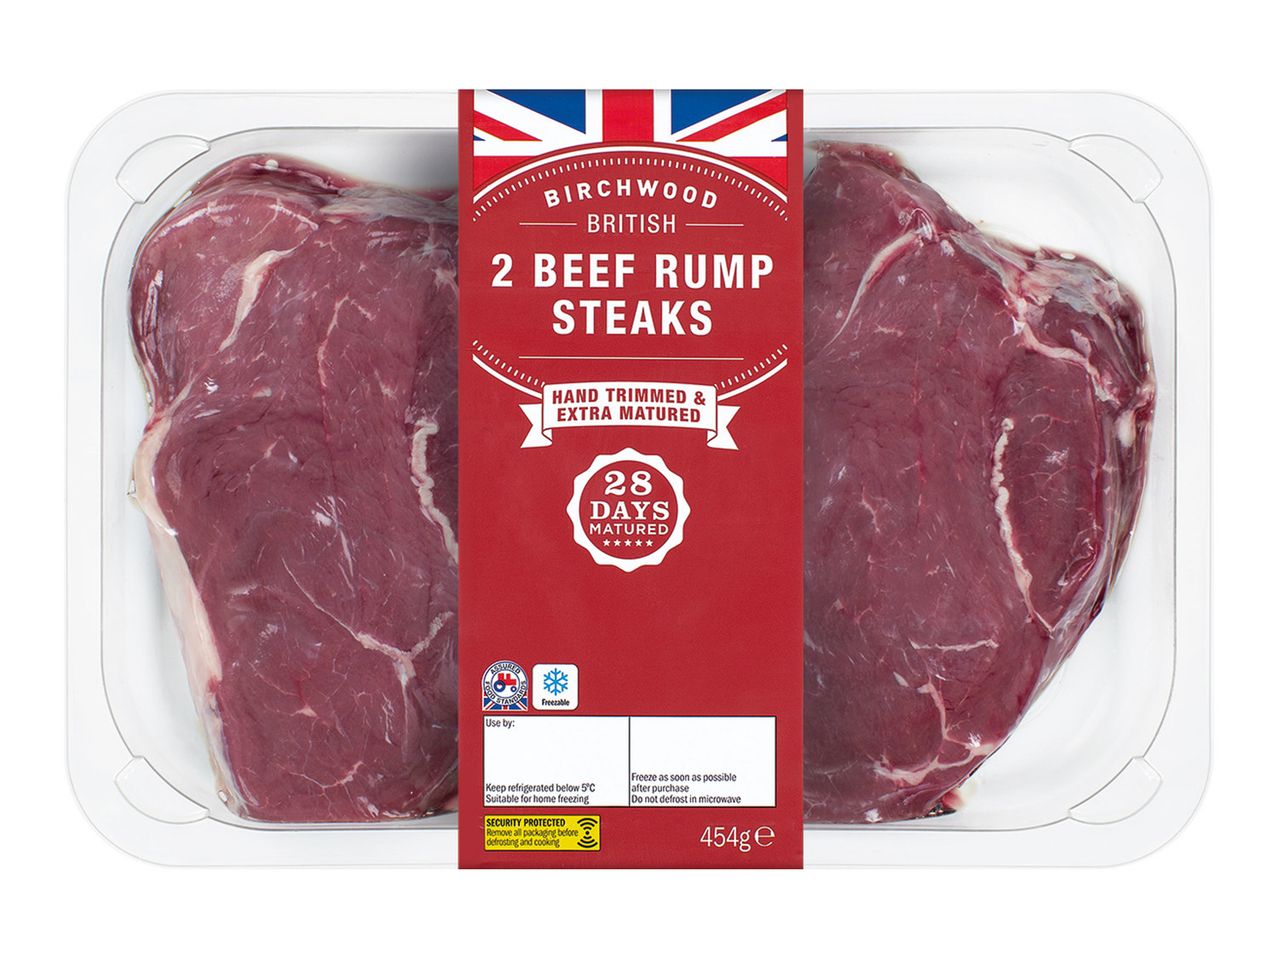 Go to full screen view: Birchwood British 2 Beef Rump Steaks - Image 1